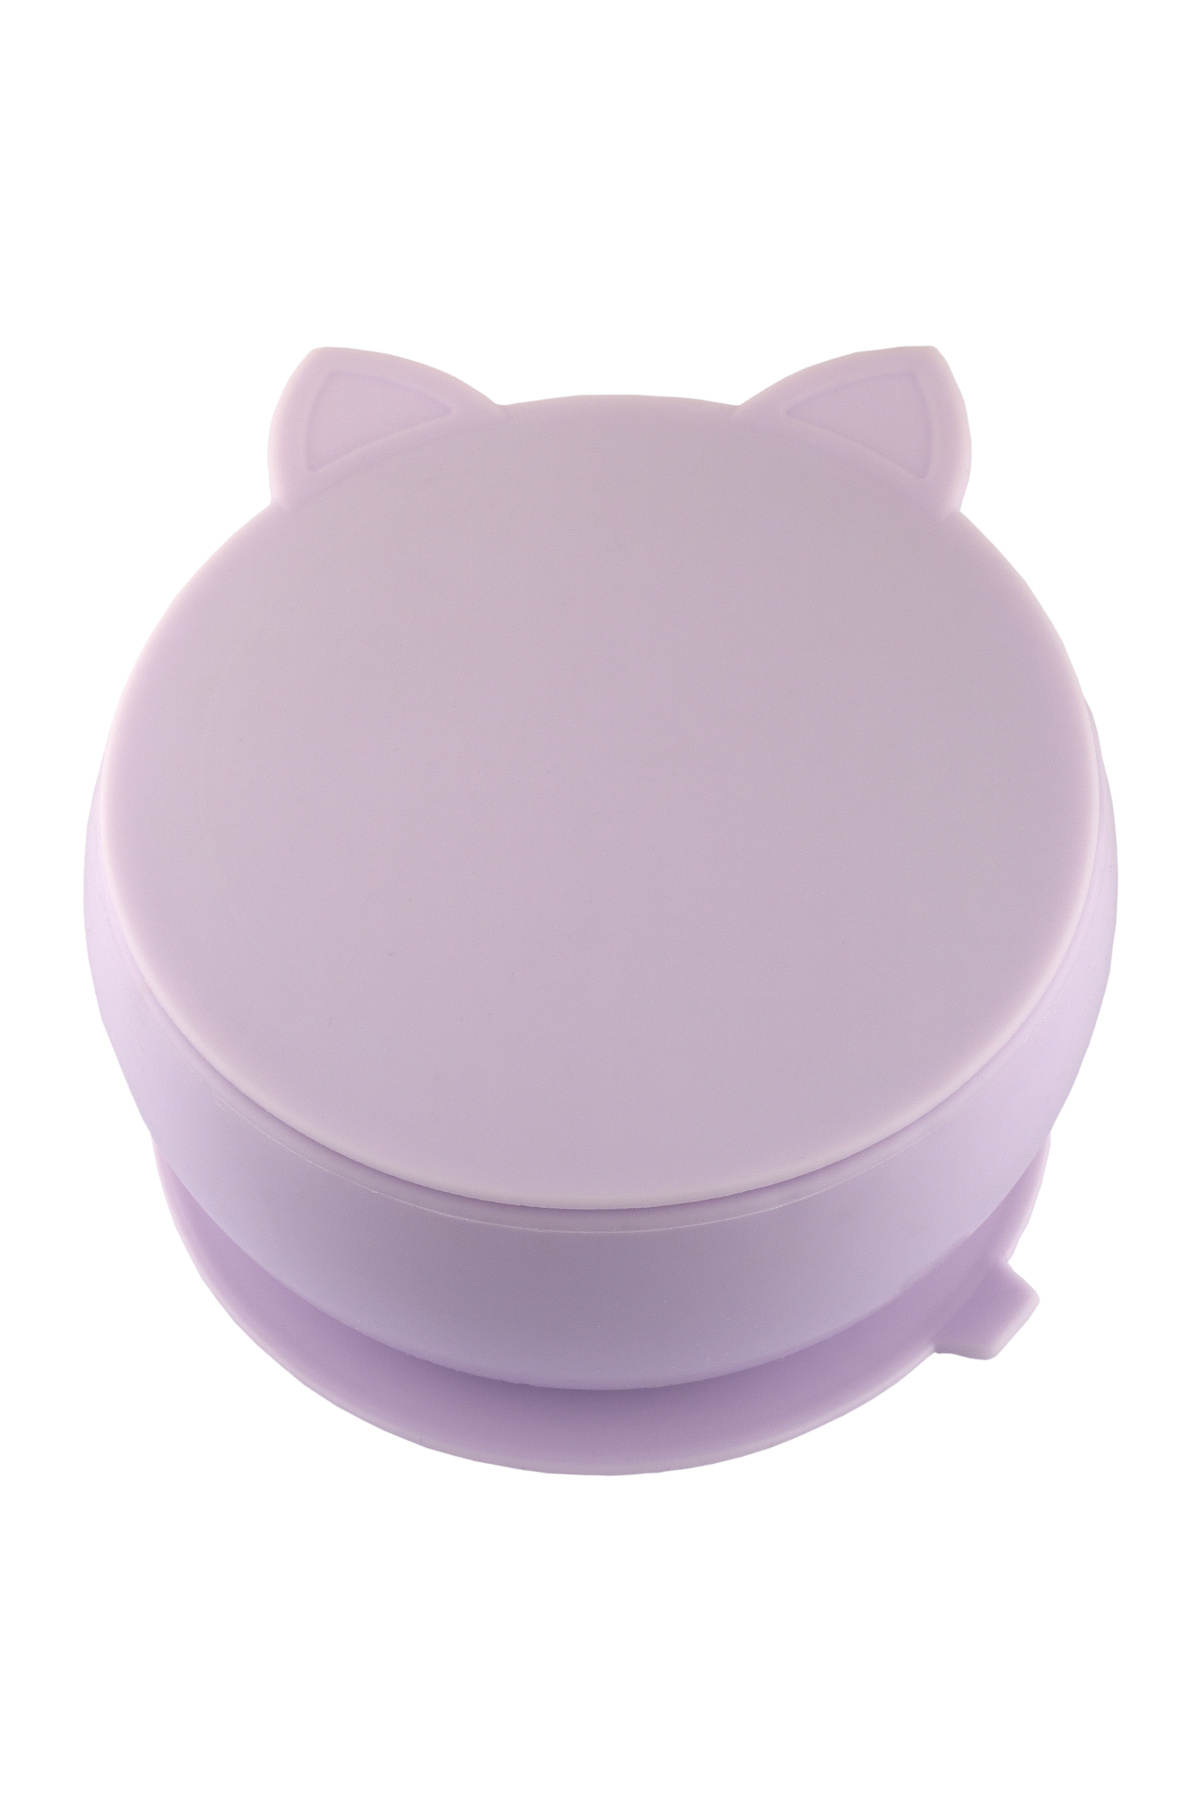 Pandish KitTen Vakum Tabanlı Kapaklı Silikon Kase Lilac